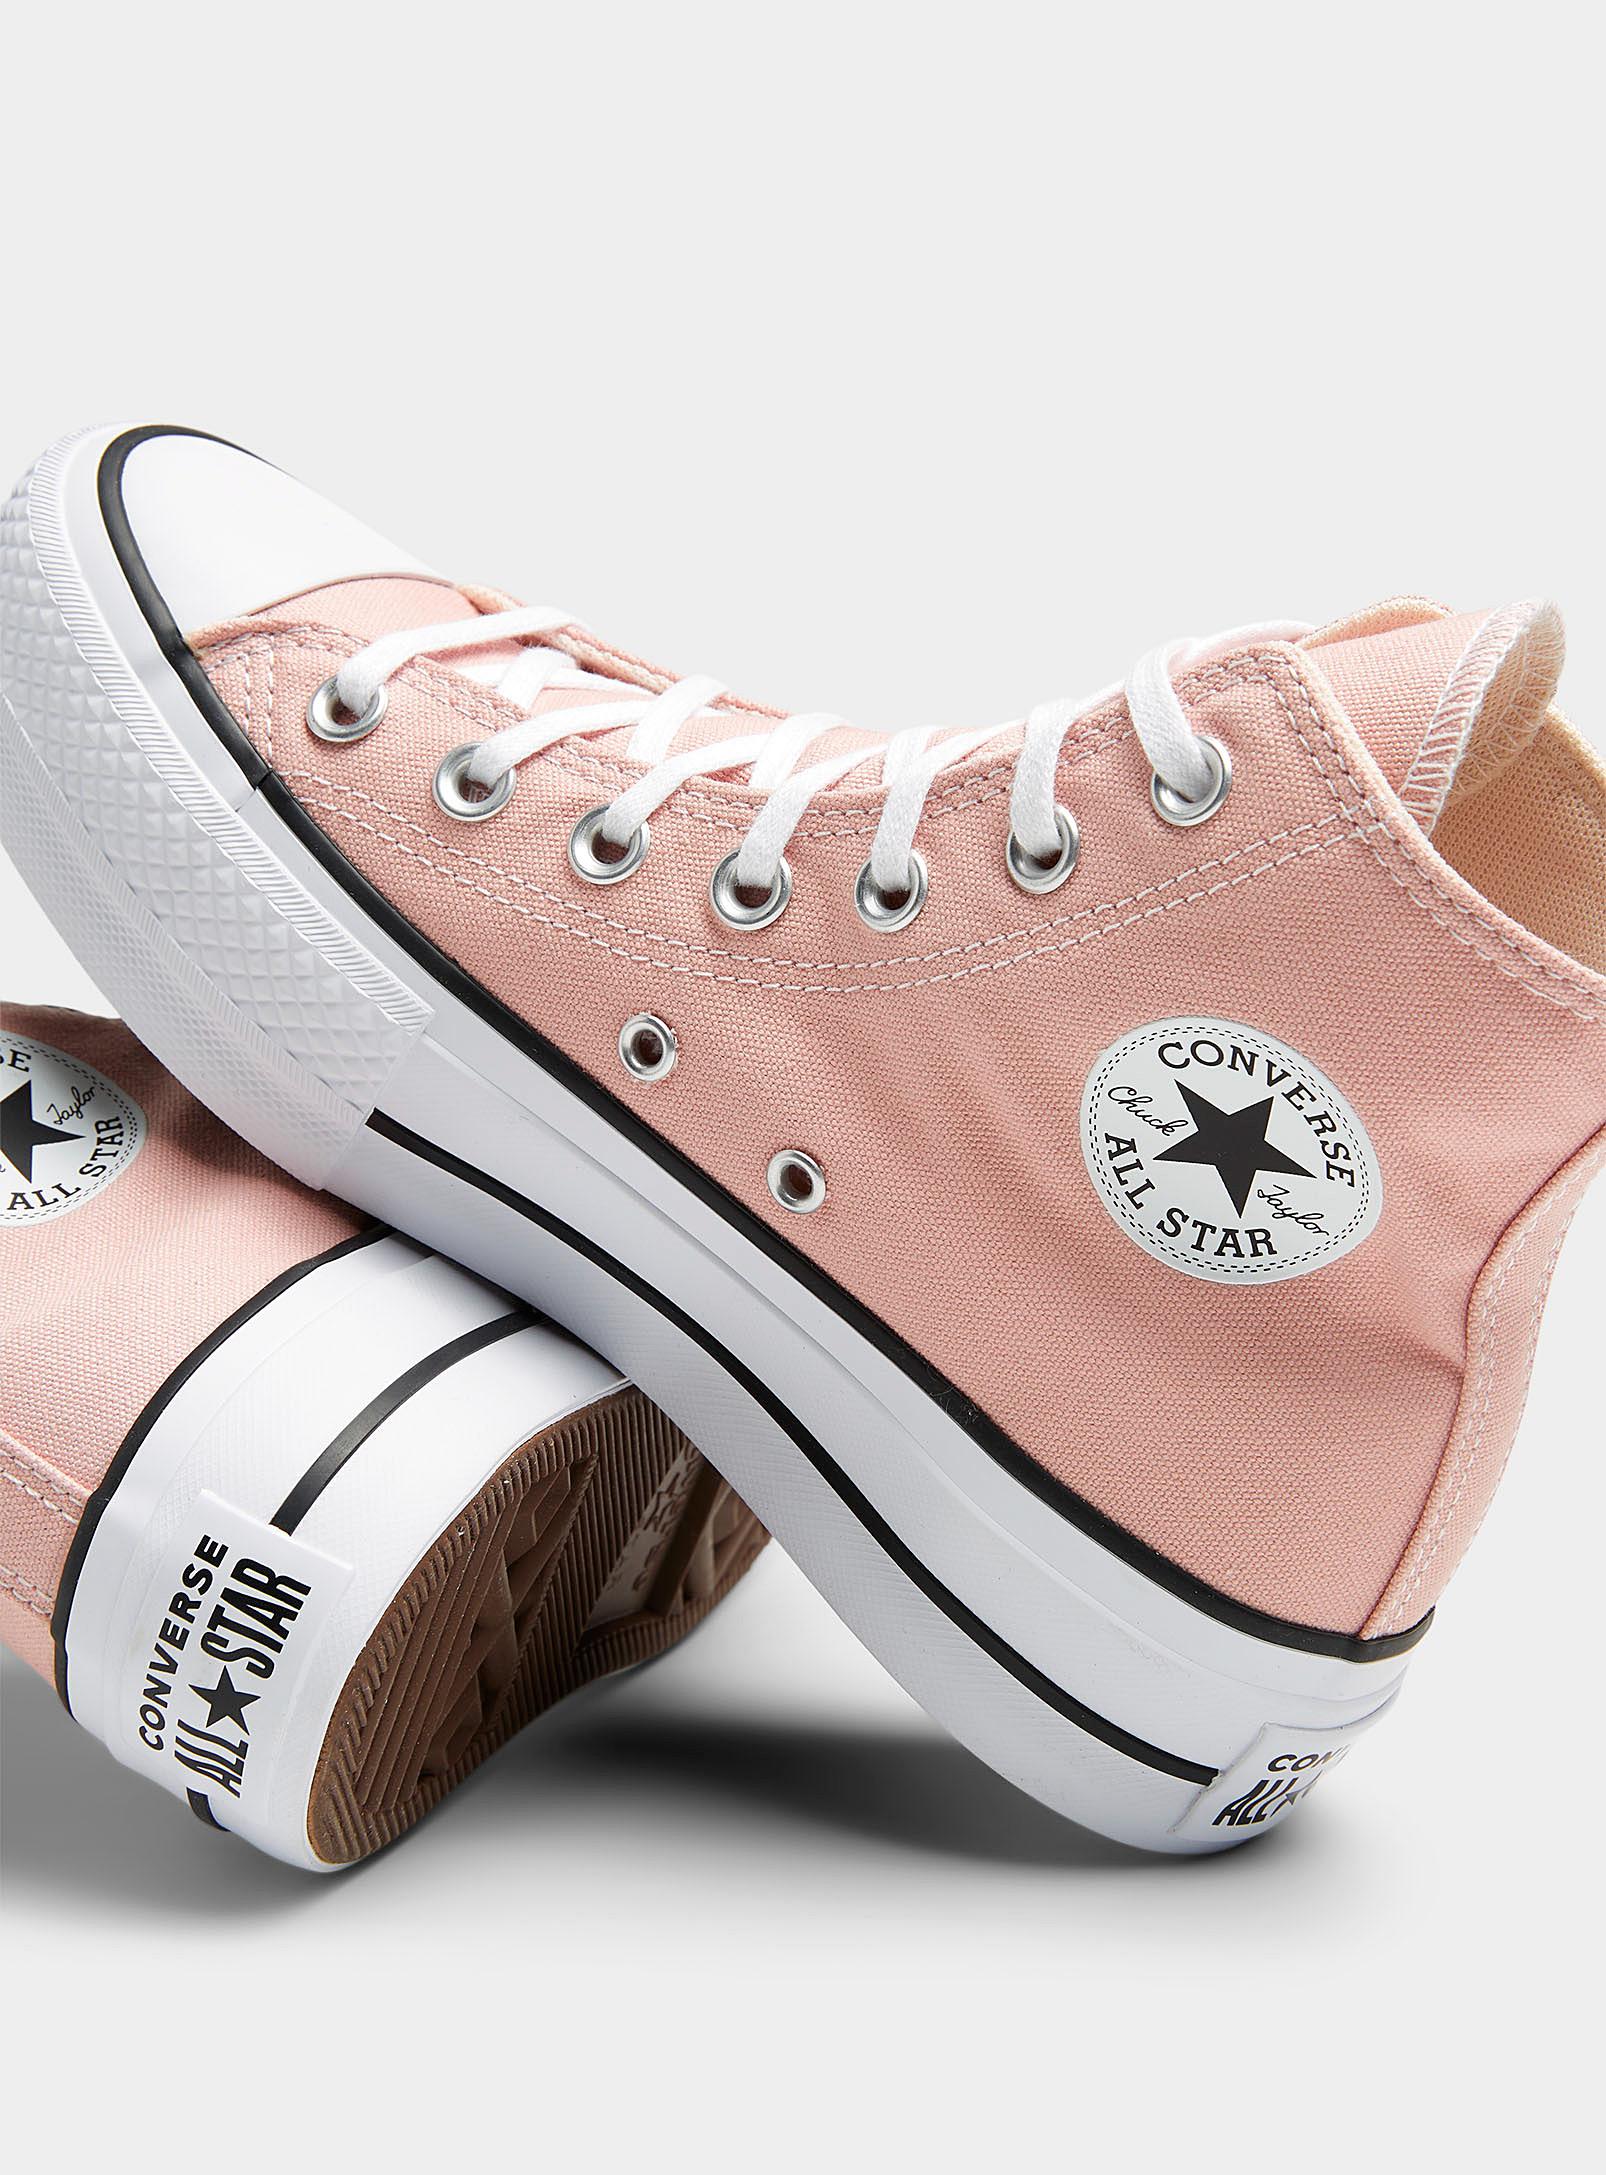 Converse Chuck Taylor All Star High Top Pink Clay Platform Sneakers Women